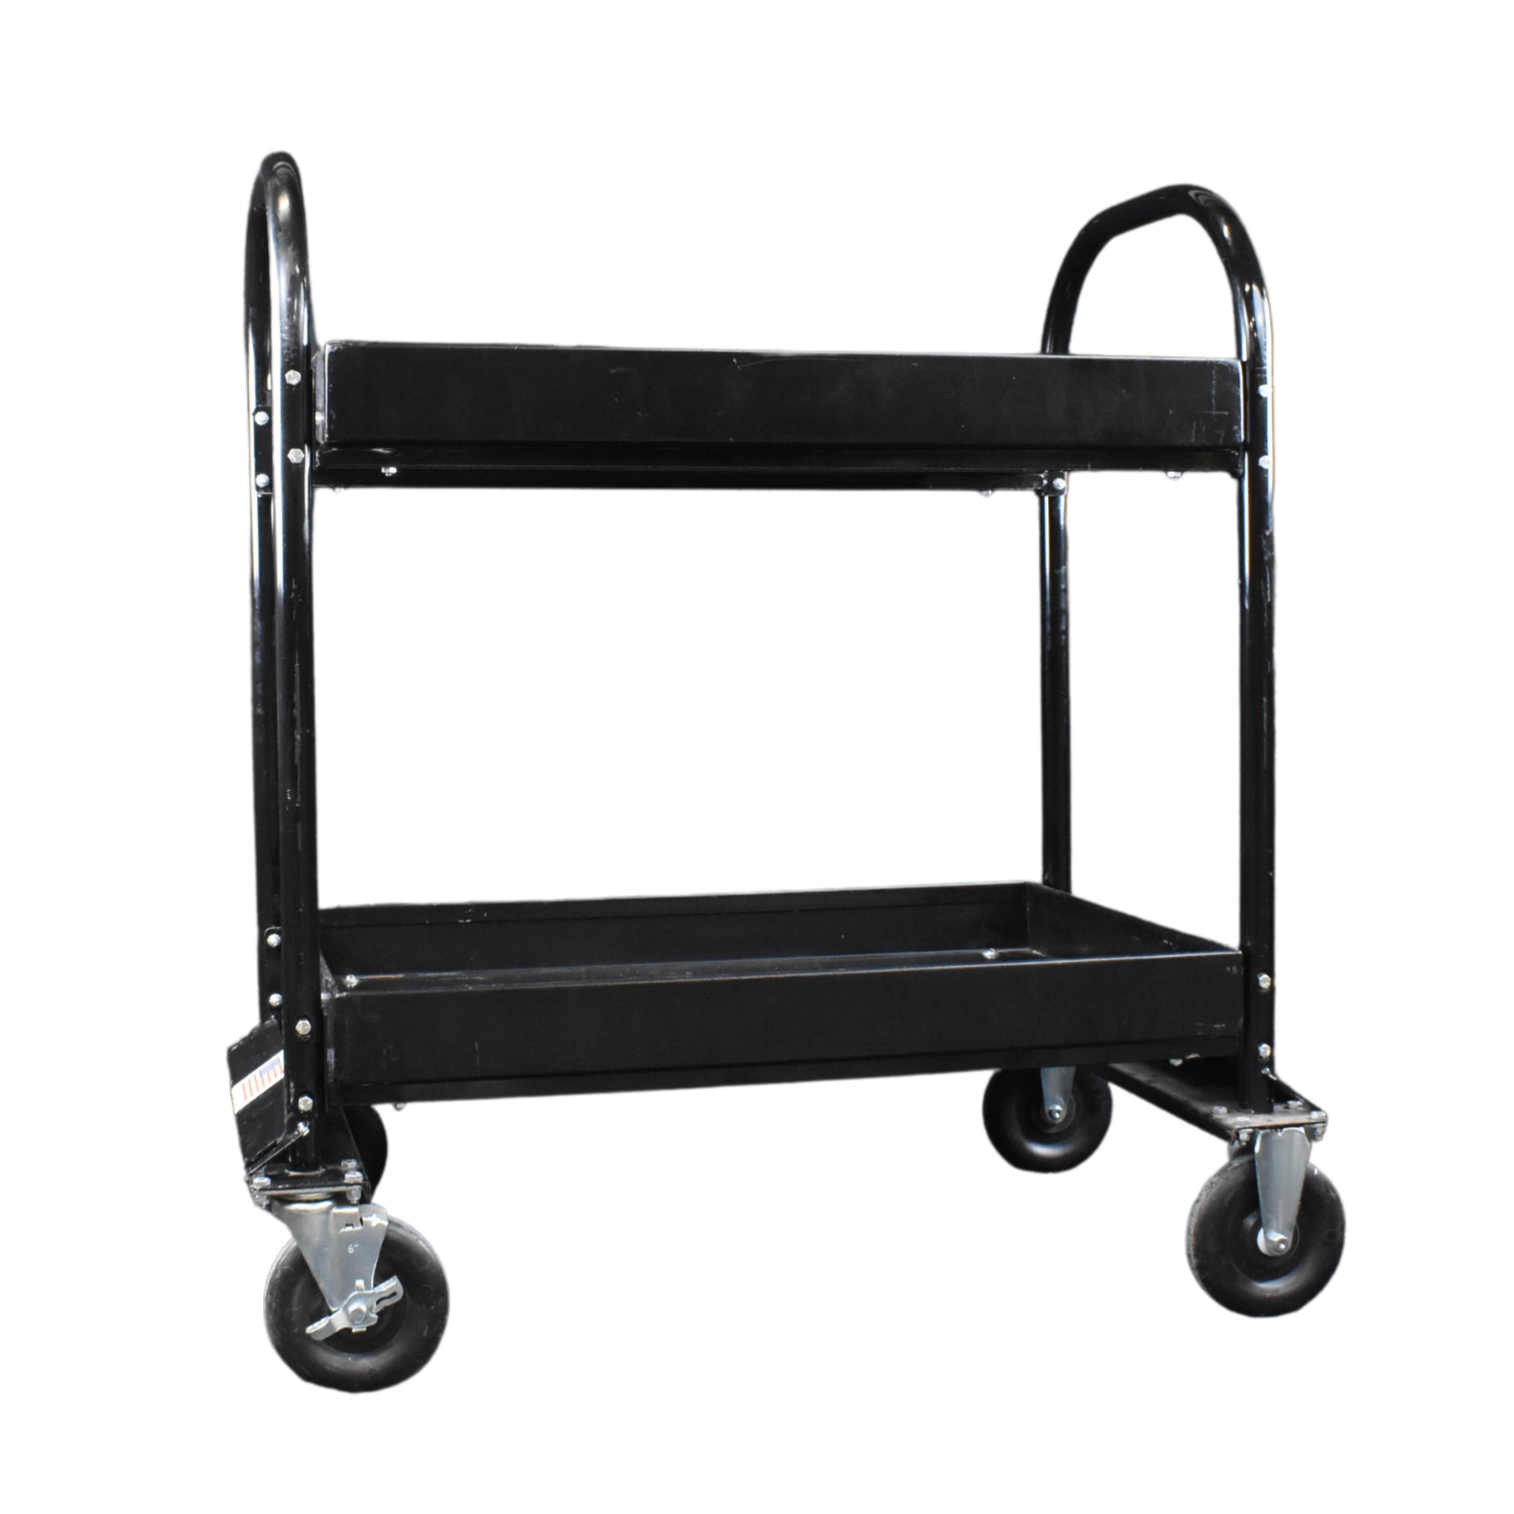 Rubbermaid Standard Utility Cart - trolley - 2 shelves - black